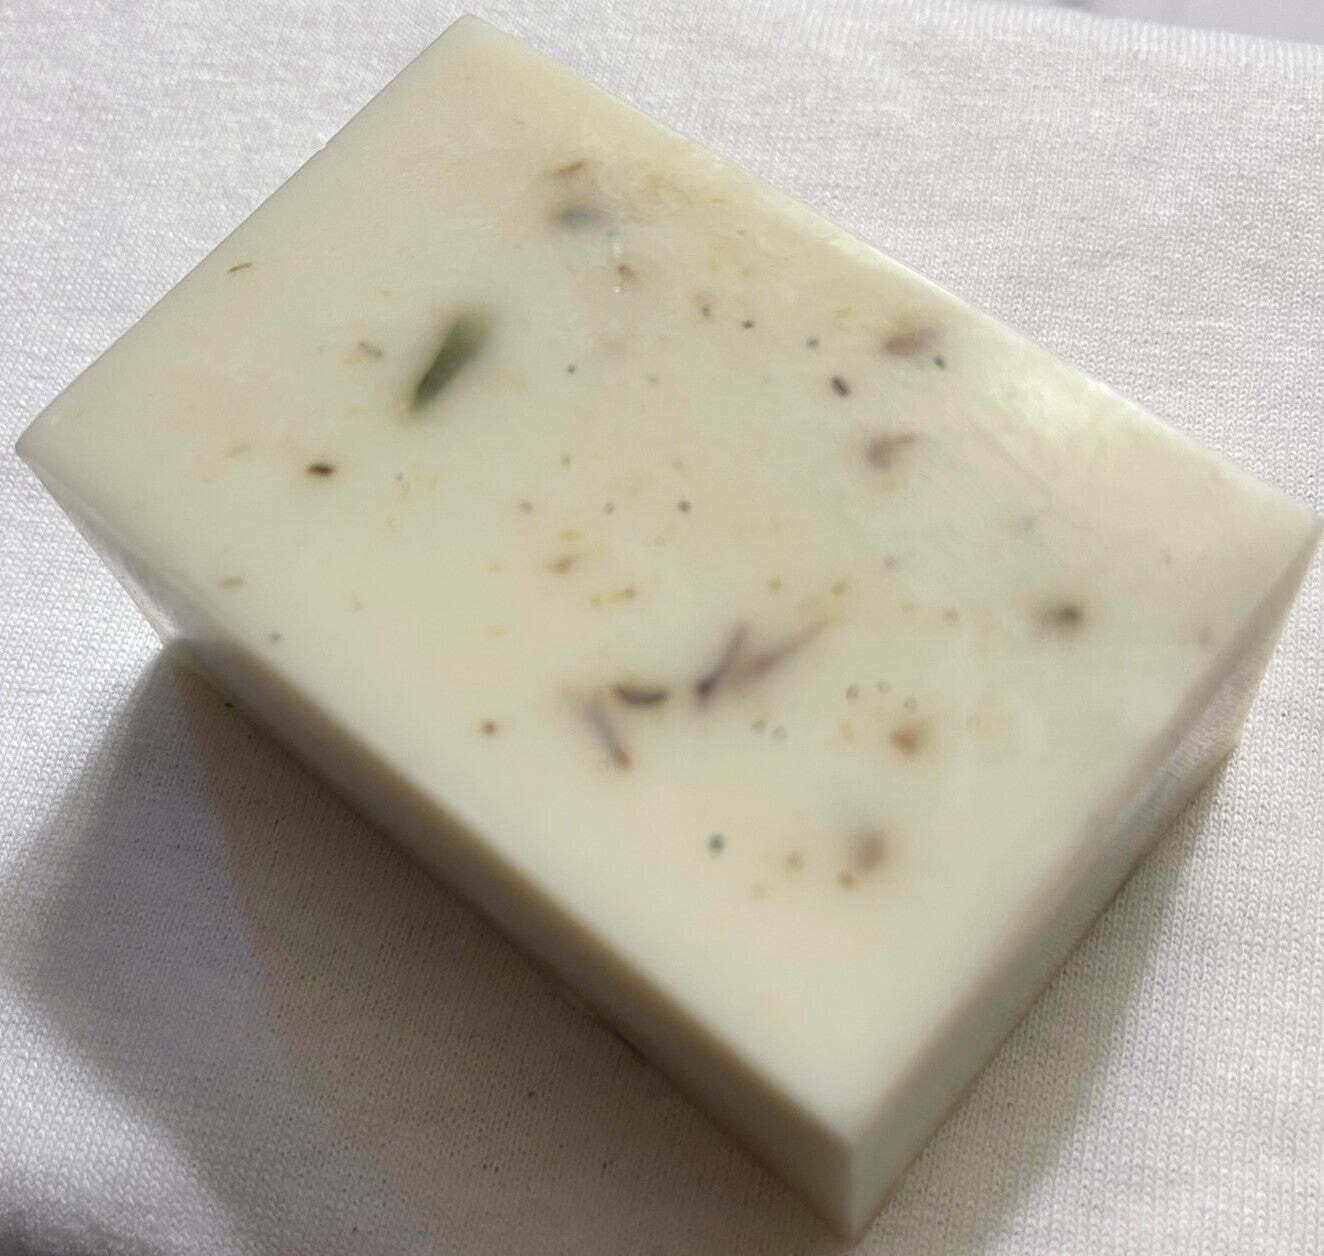 Tea Tree Soap infused with Sea Moss